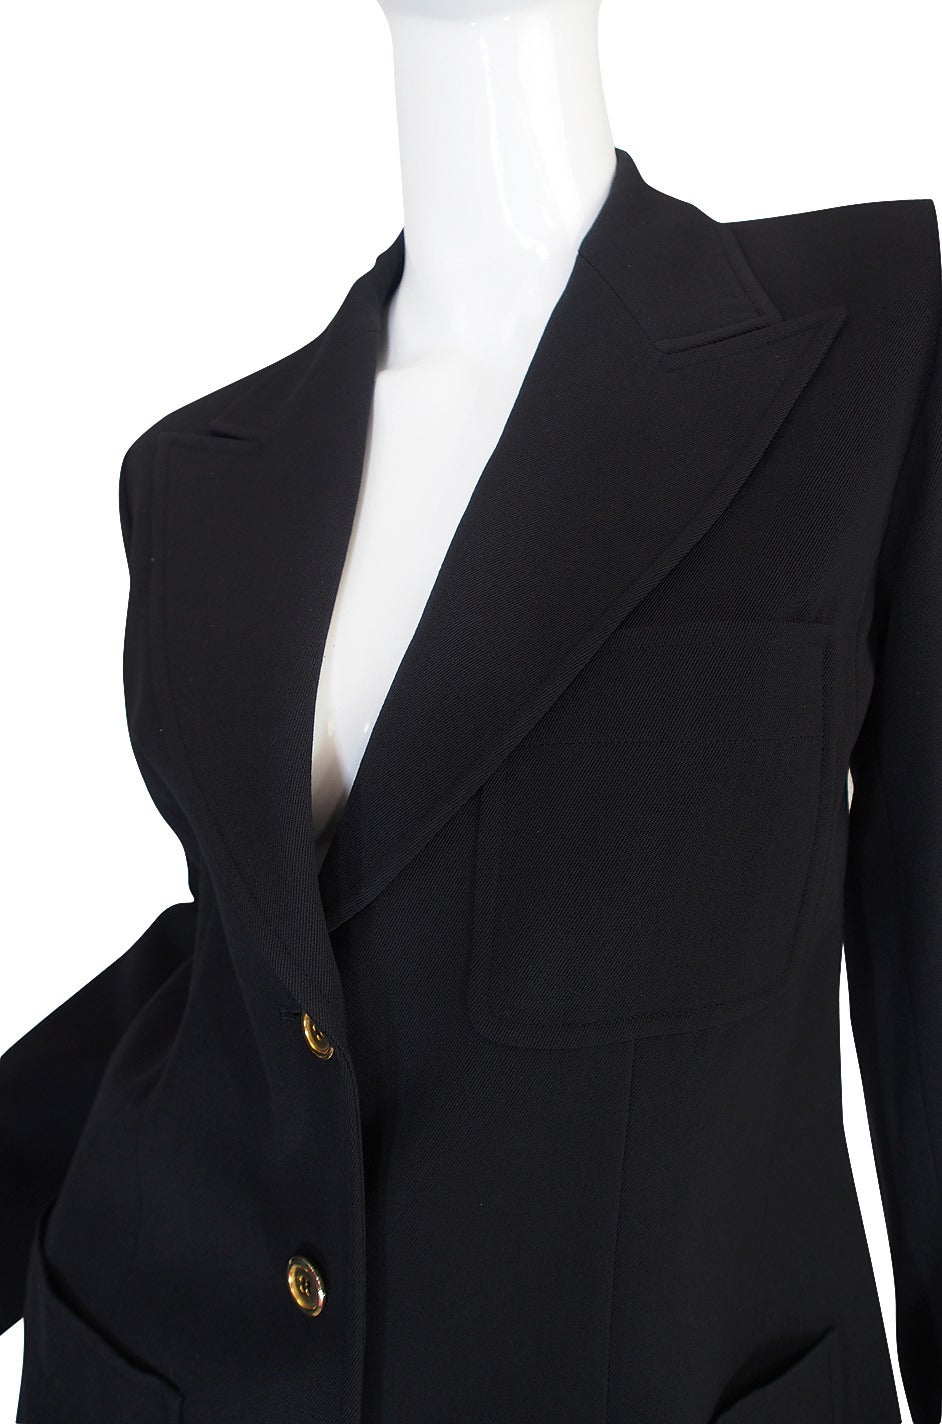 Rare Late 1960s Custom Yves Saint Laurent Suit 2